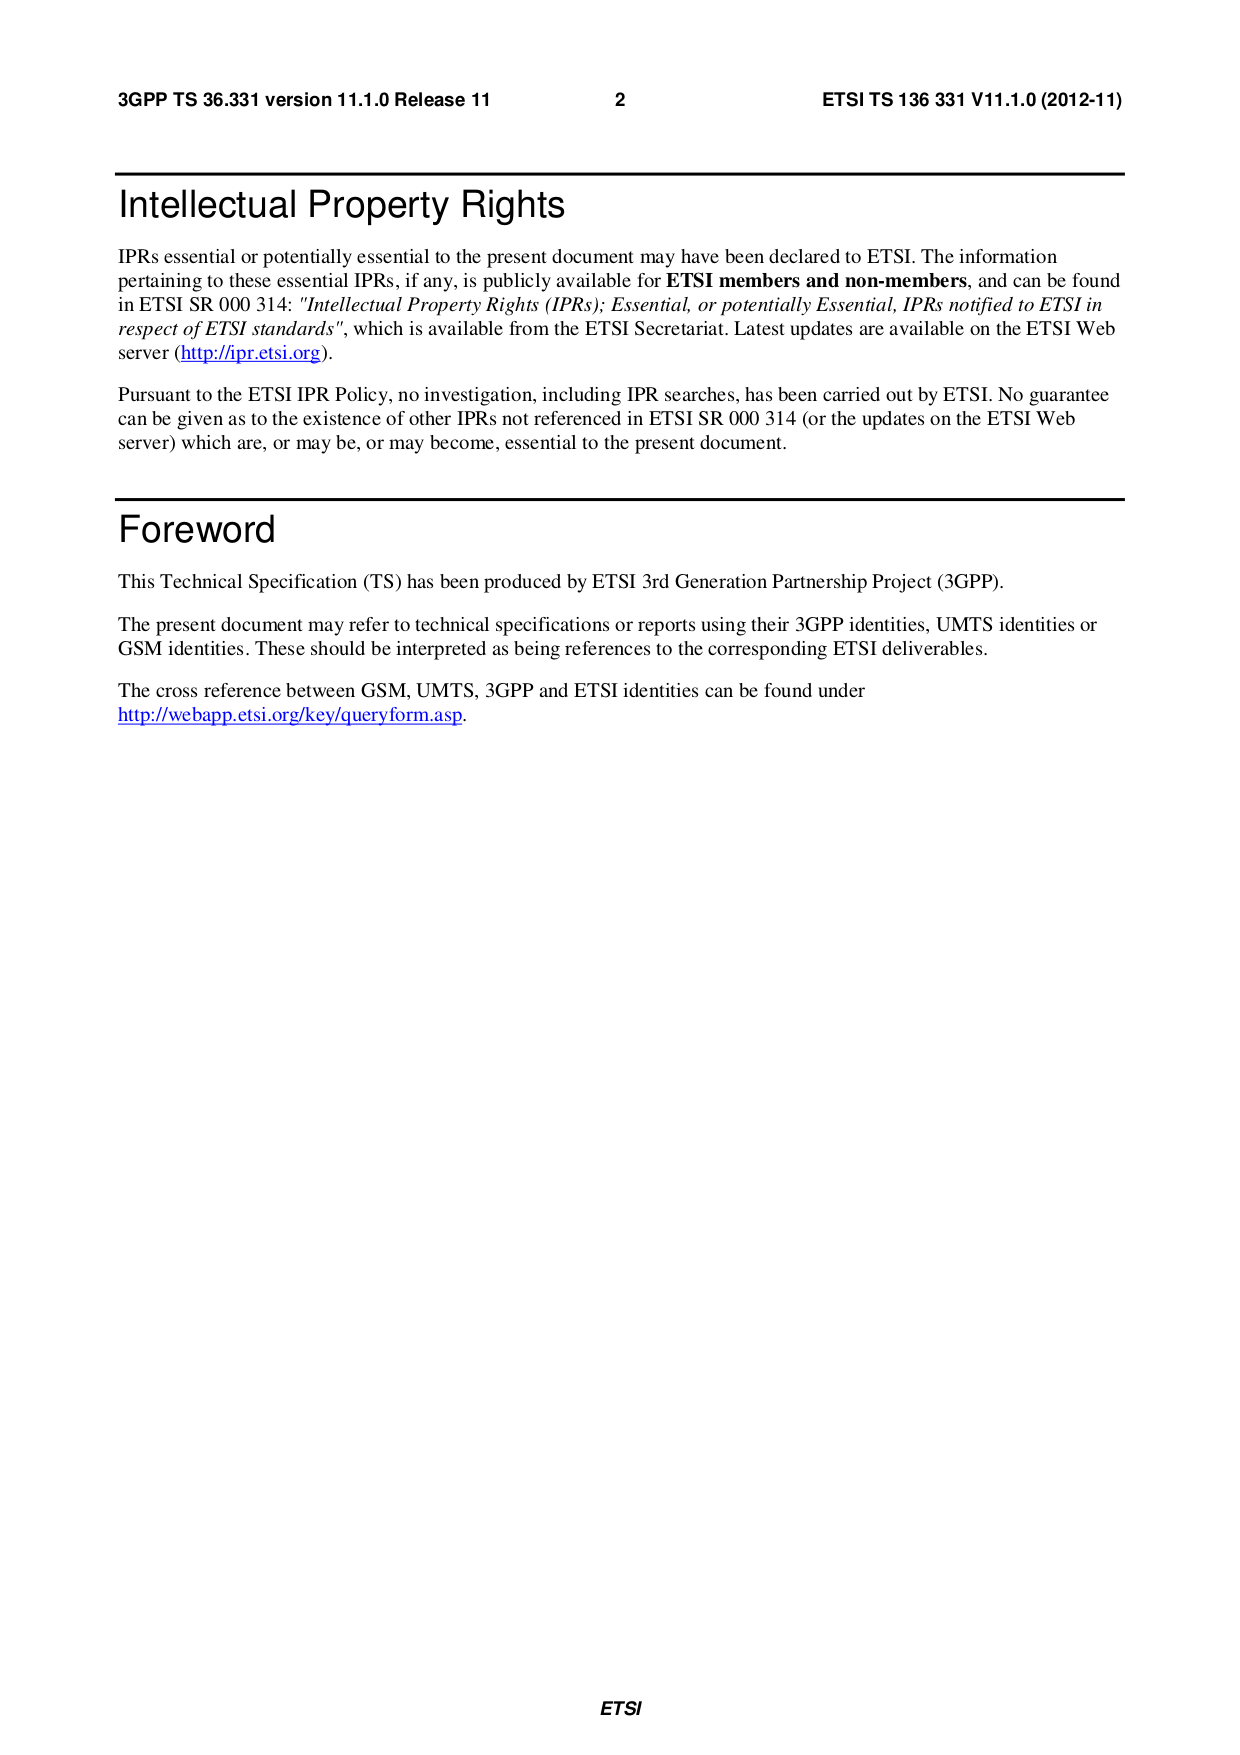 veracity timenet vtnus gps receiver pdf